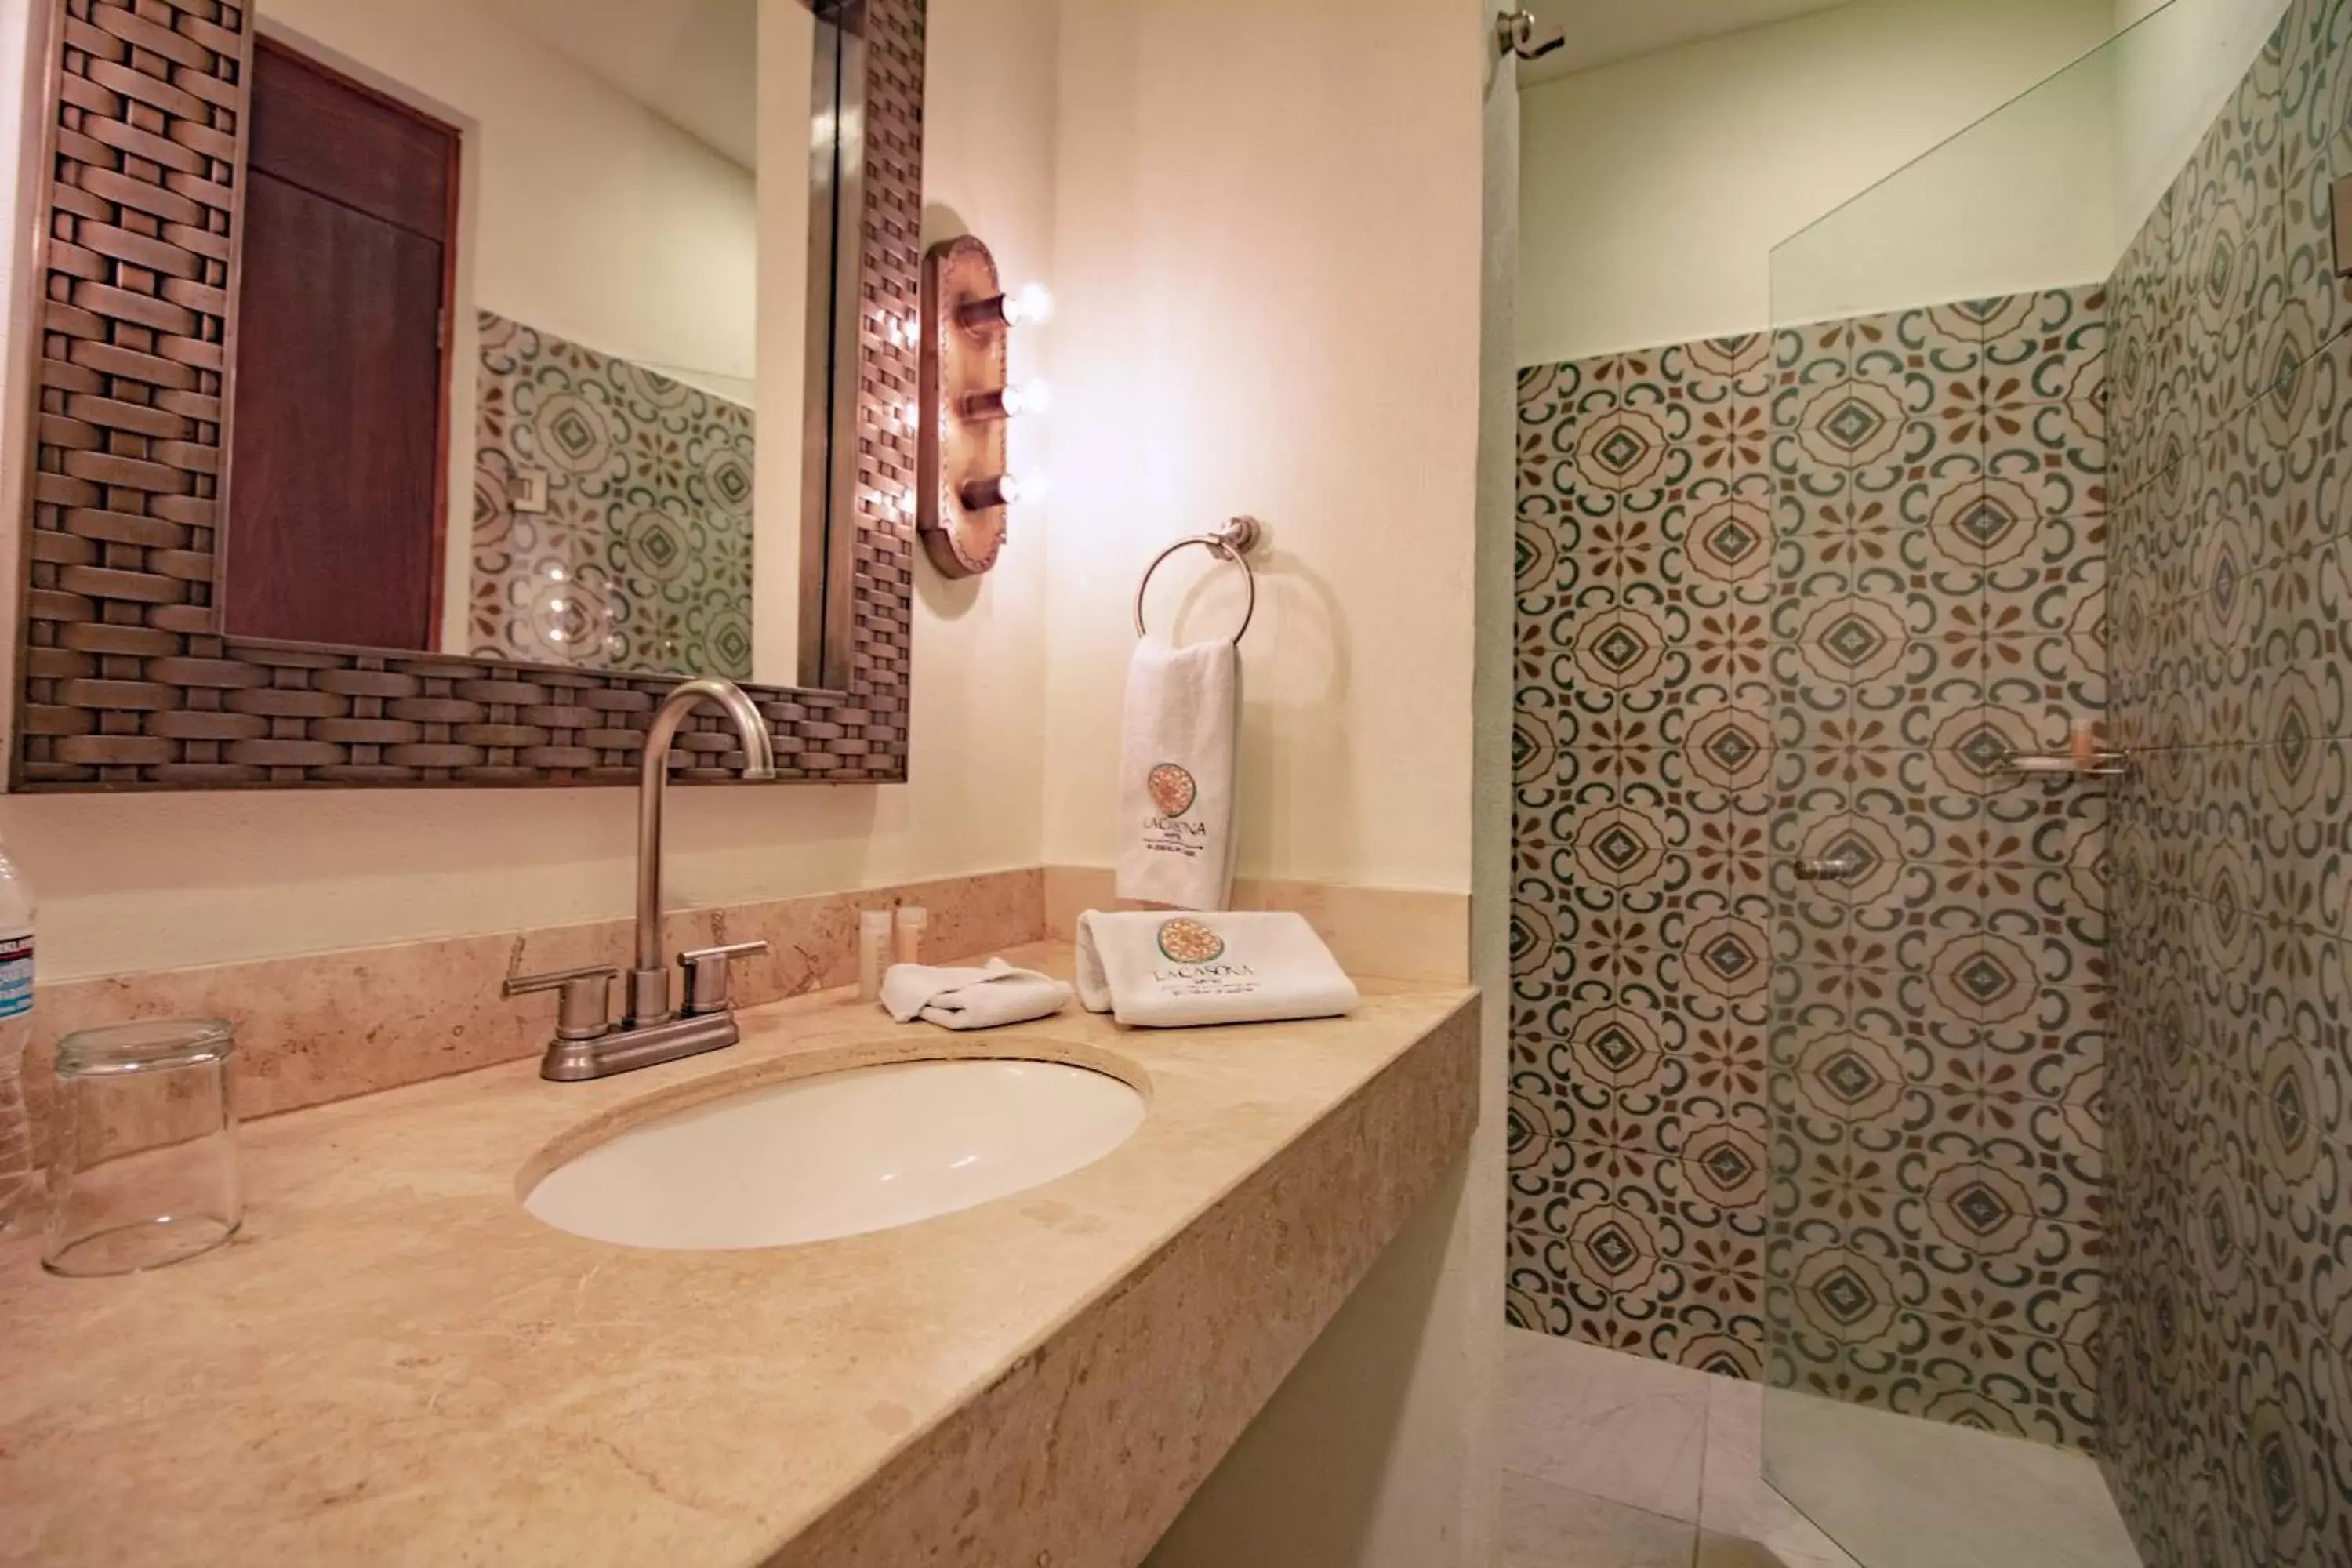 Photo of the whole room, Bathroom in Hotel La Casona 30